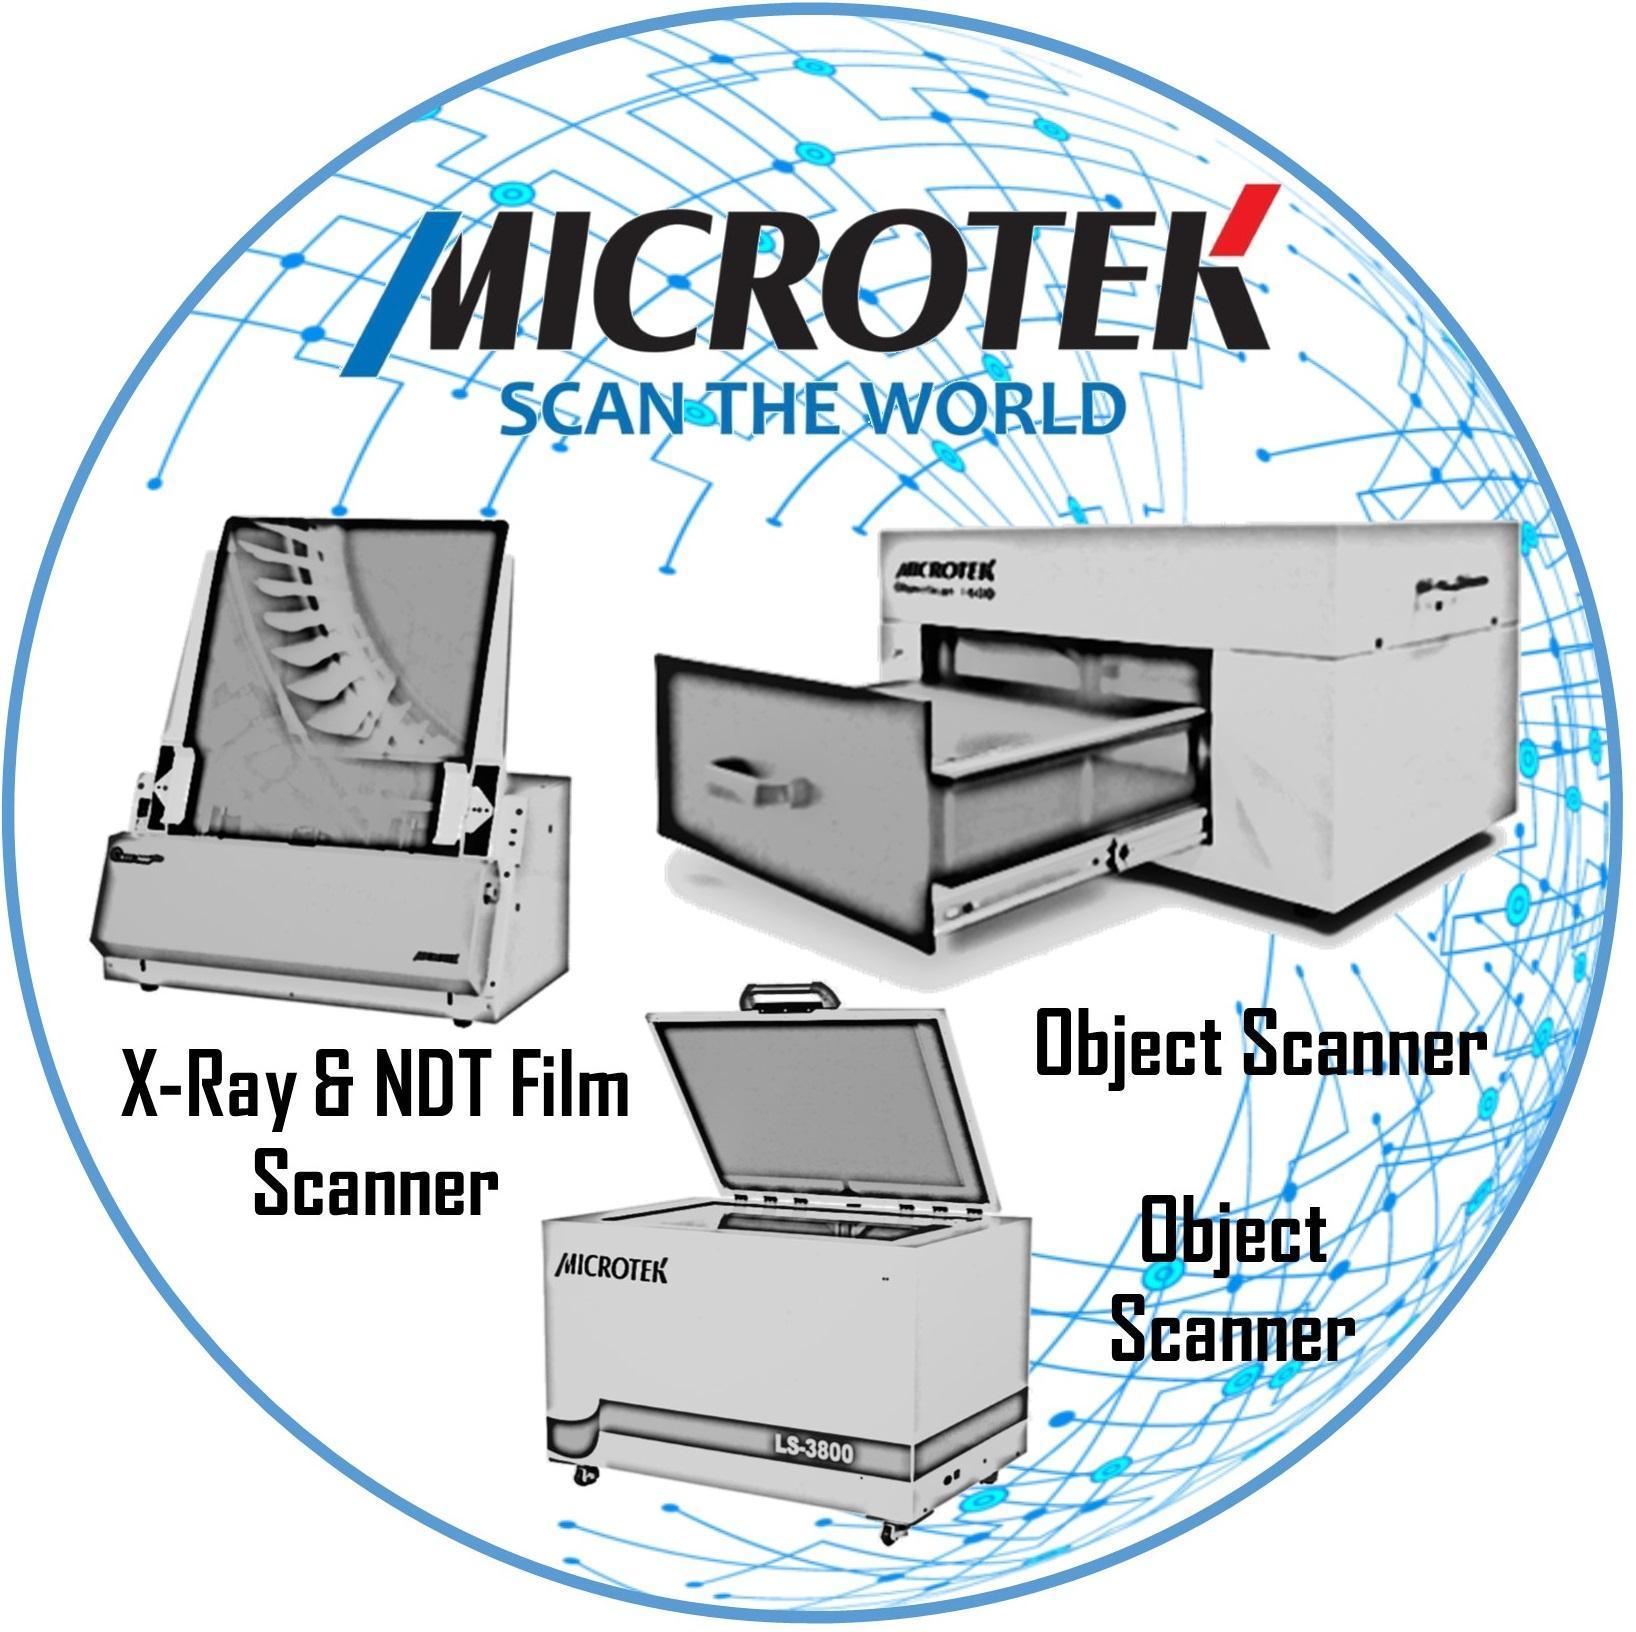 Microtek Object Scanner